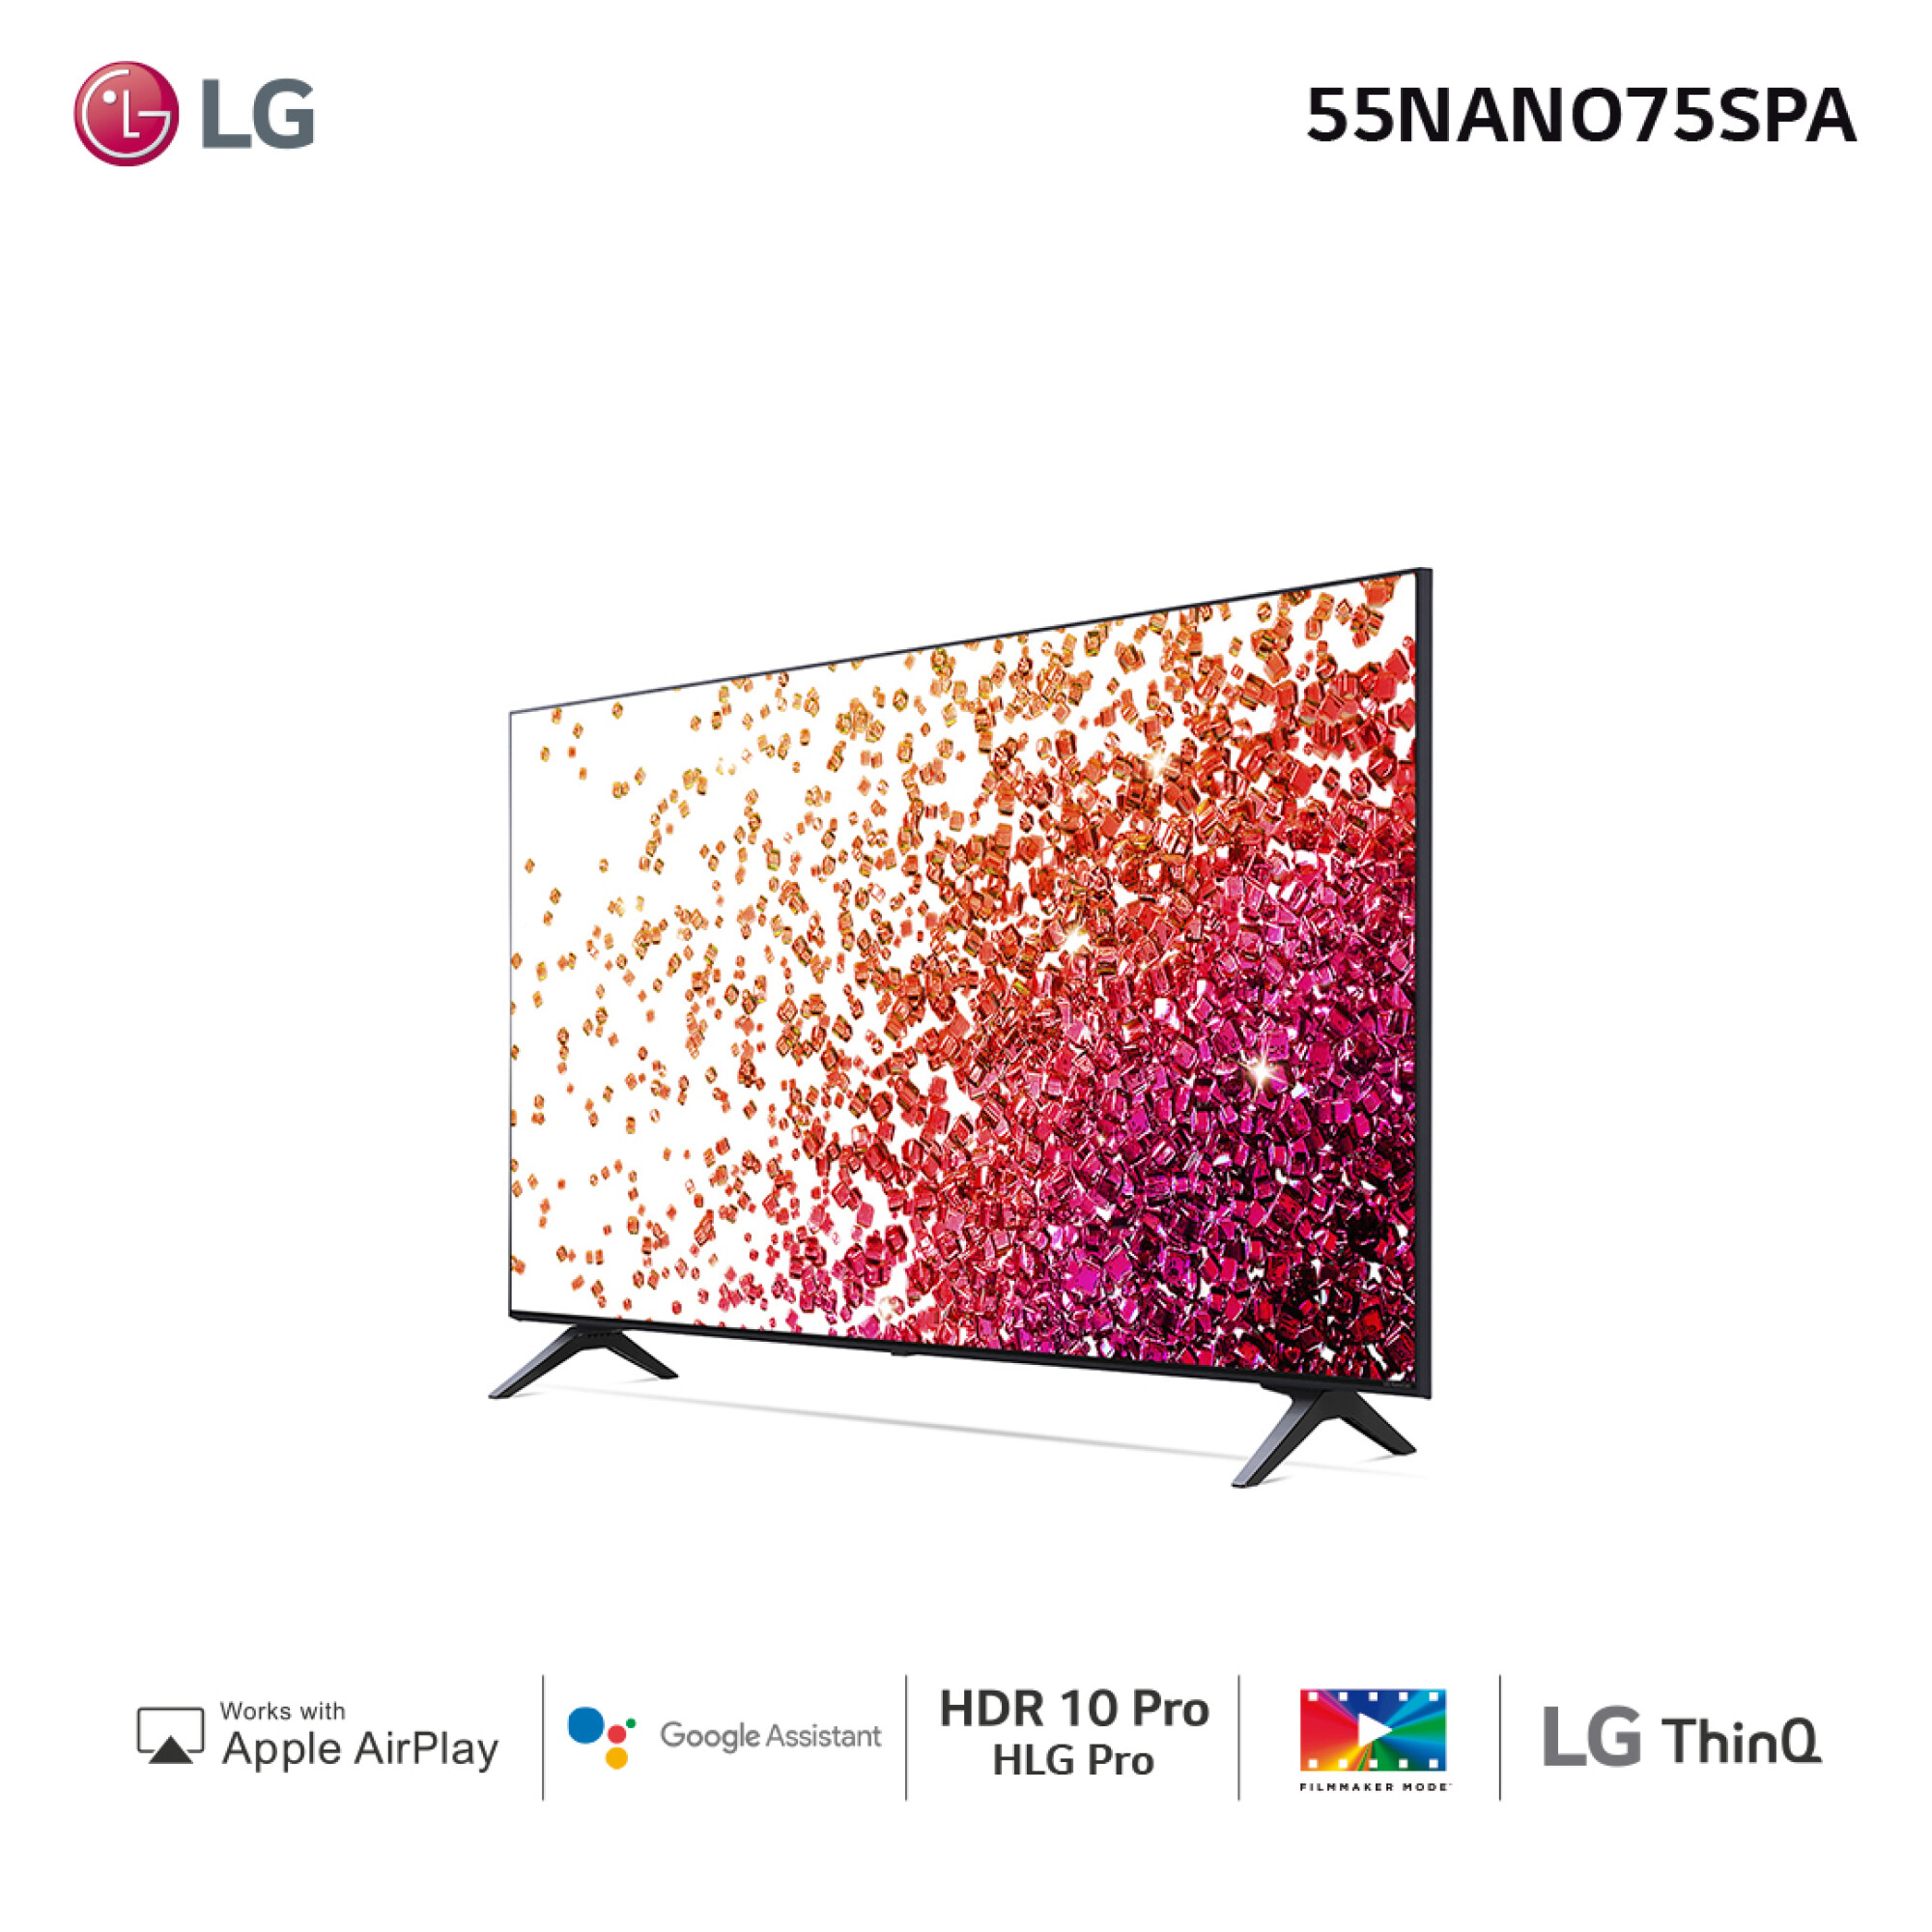 Pantalla LG NanoCell TV 75 Pulgadas 4K SMART TV con ThinQ AI